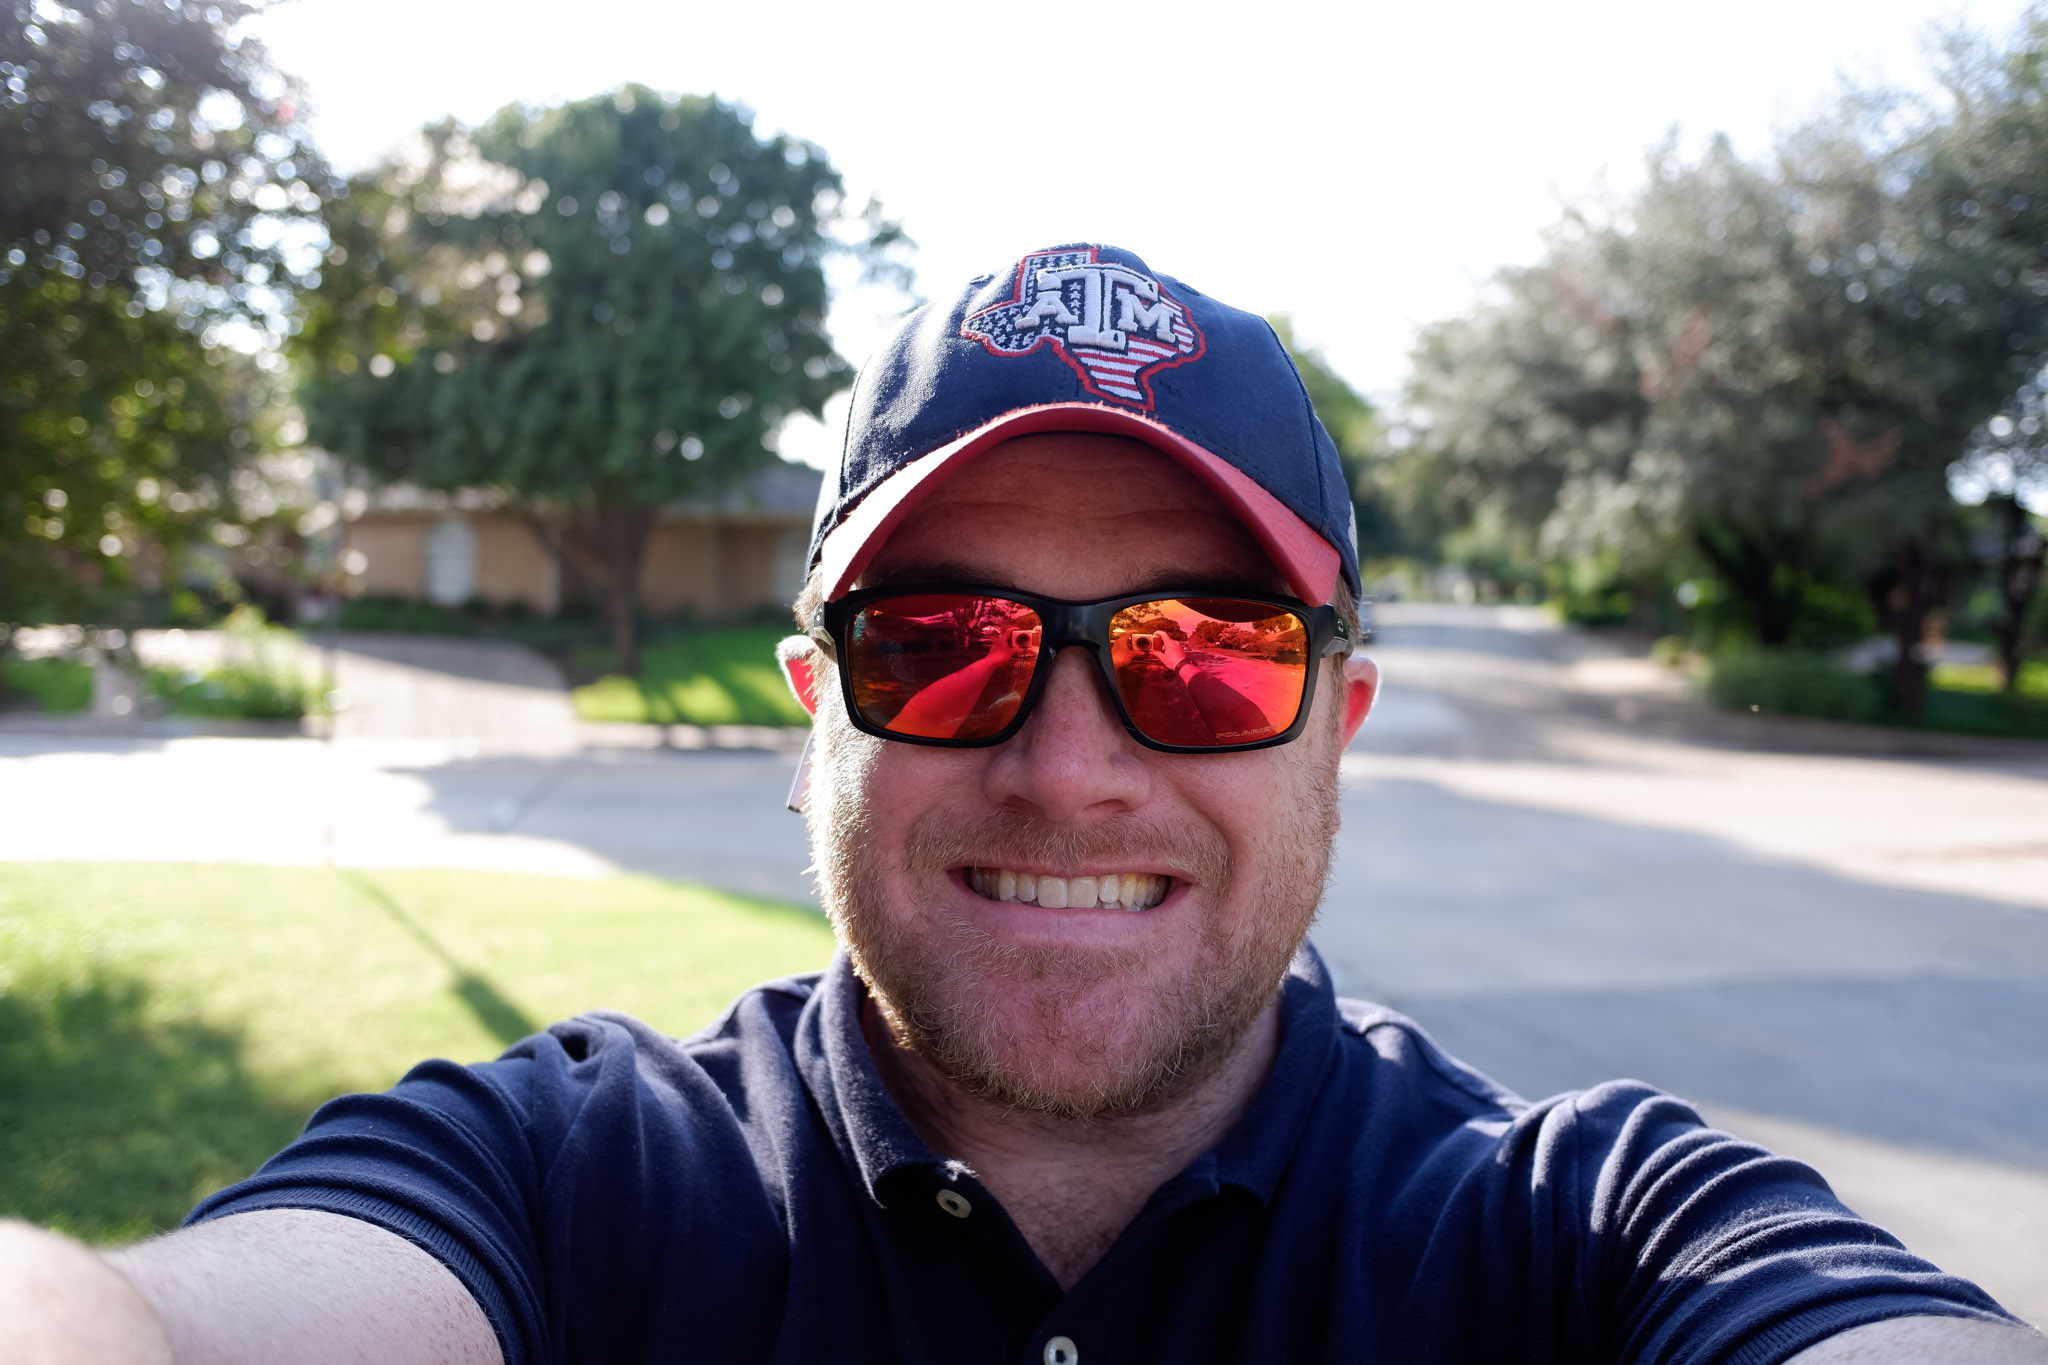 a man wearing sunglasses and a baseball cap taking a selfie